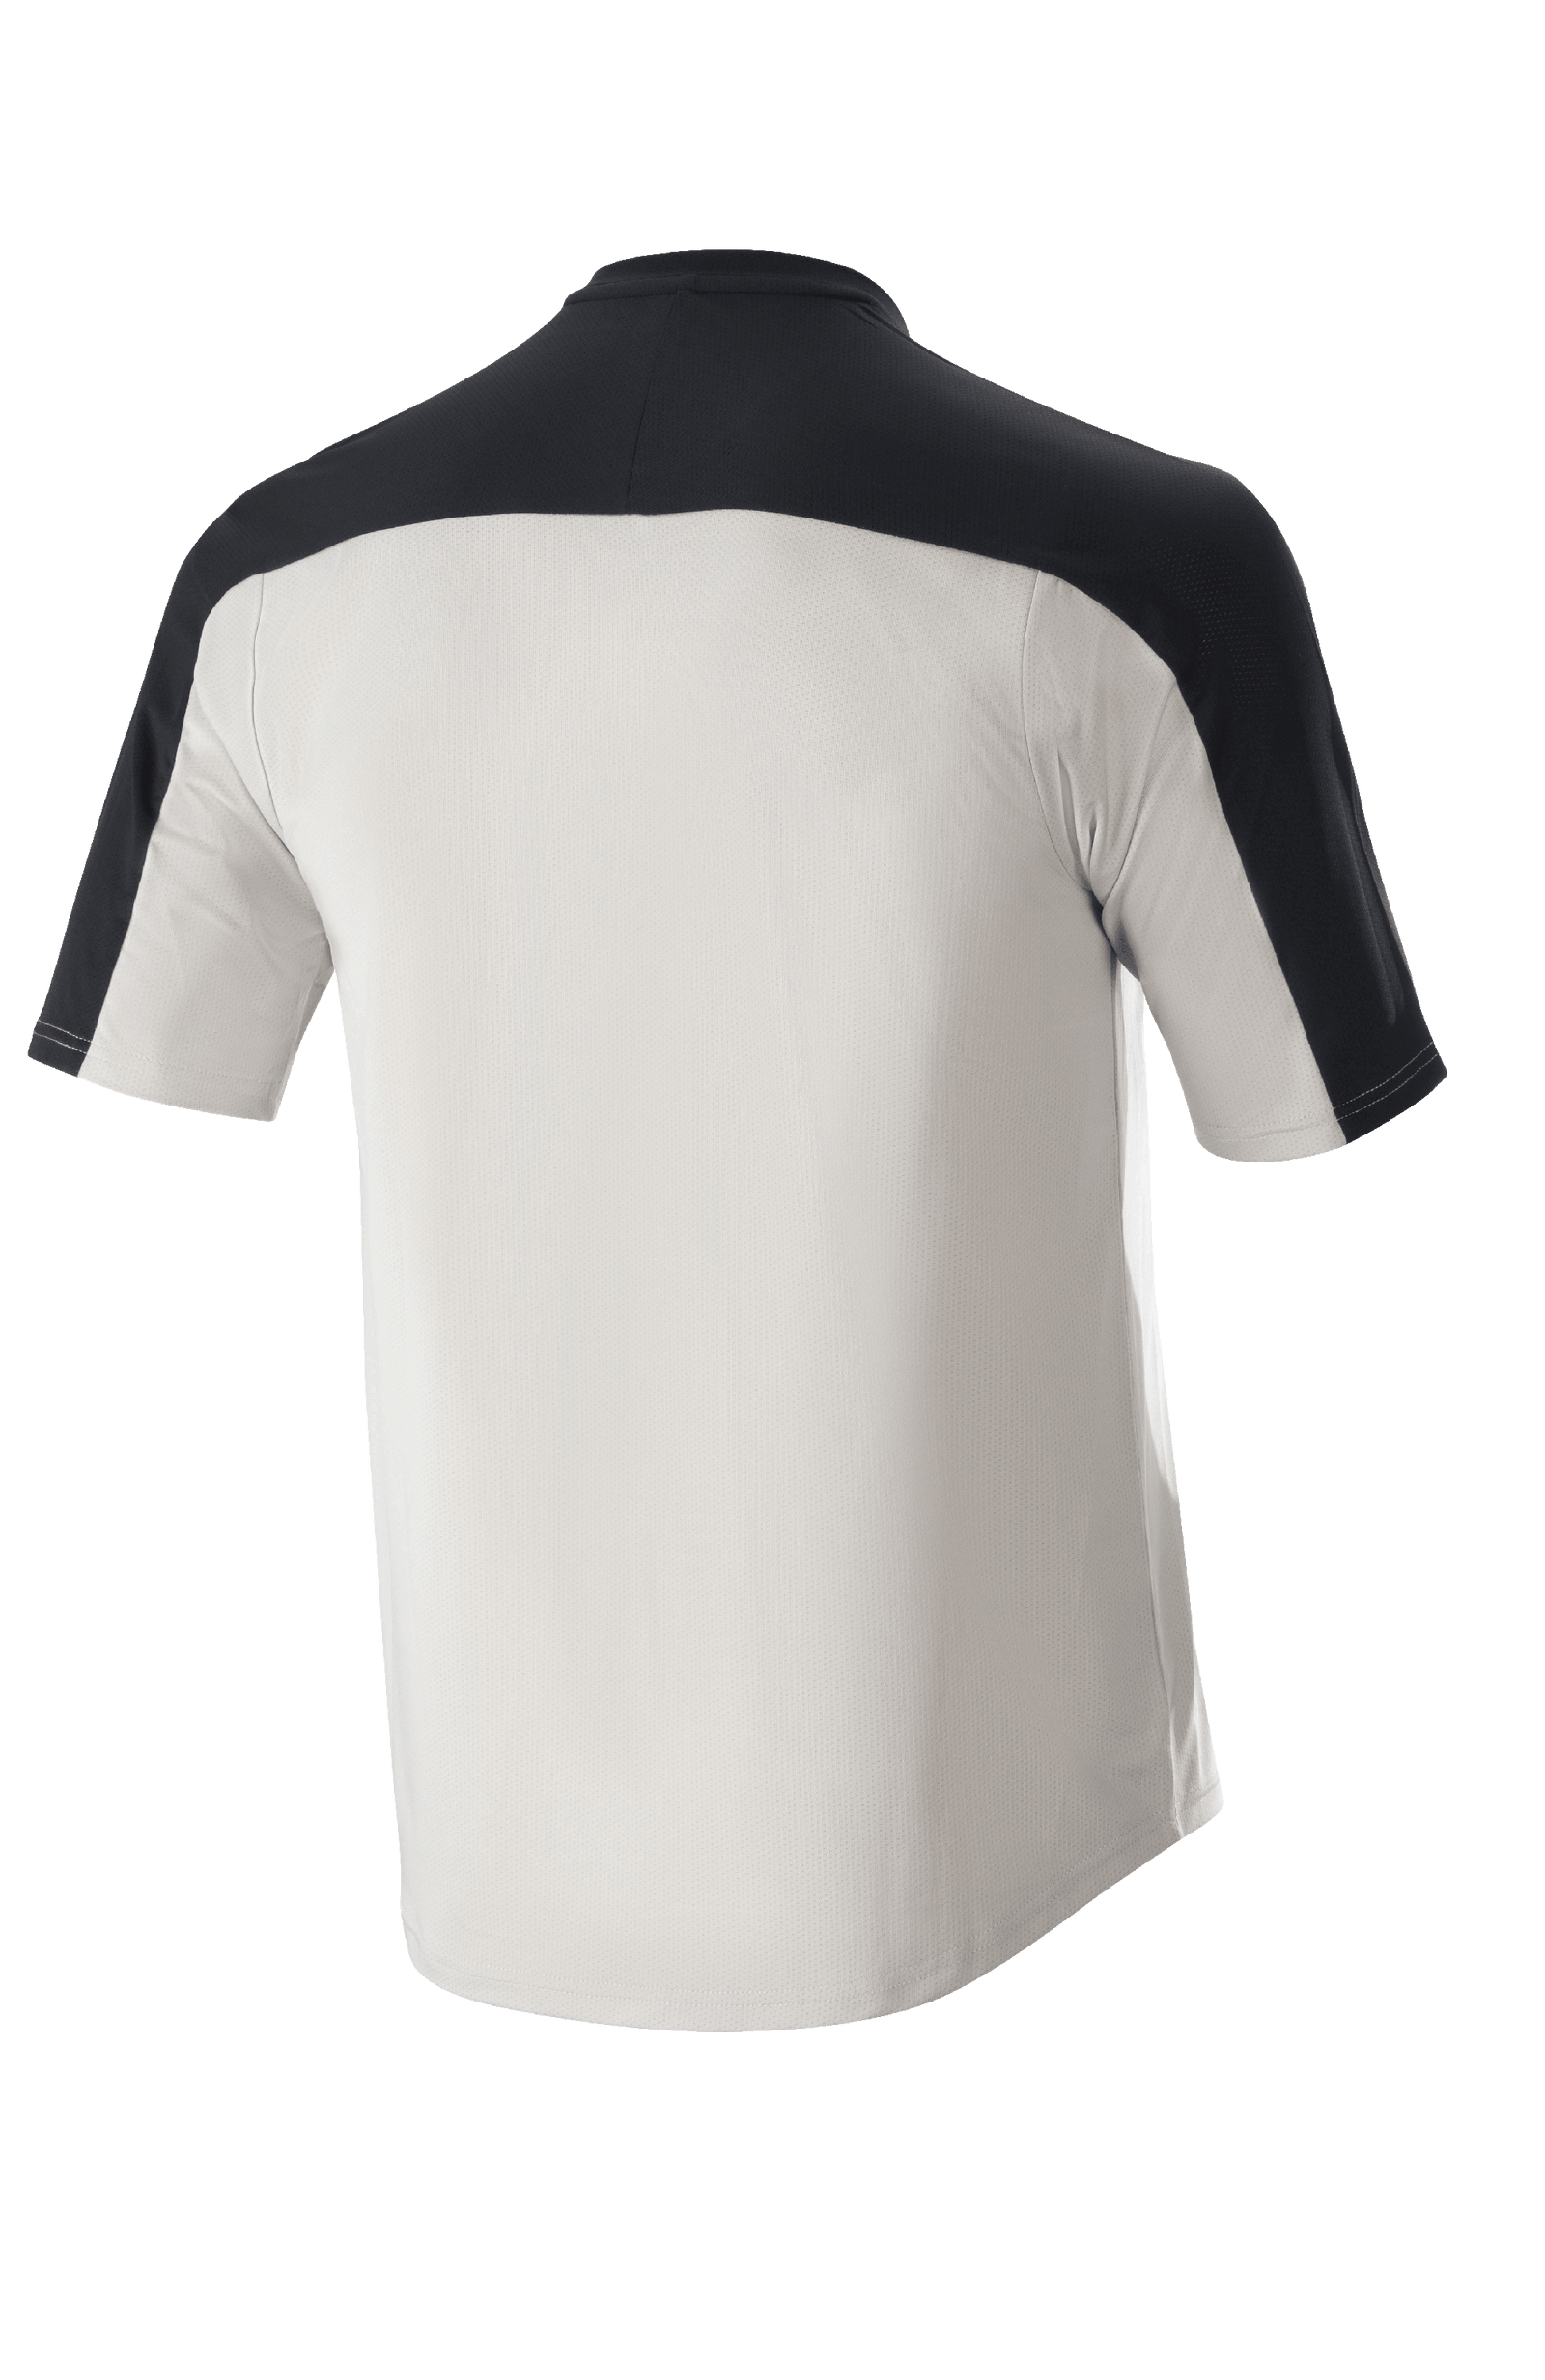 Drop Meta Jersey - Short Sleeve